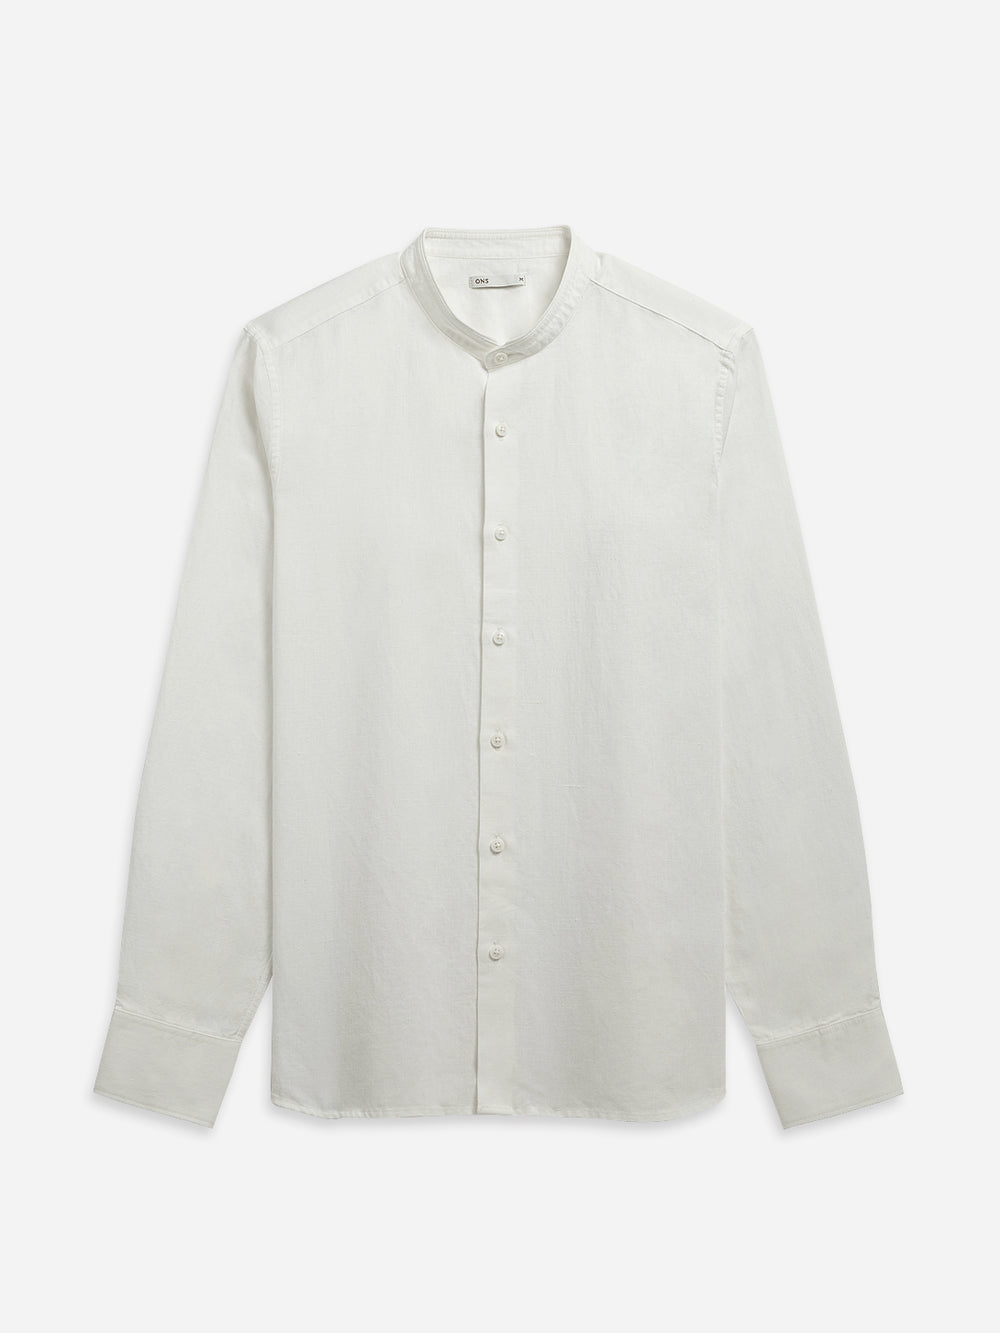 OFF WHITE Aleks Cotton Linen Shirt Mens Button Up Shirt Band Collar